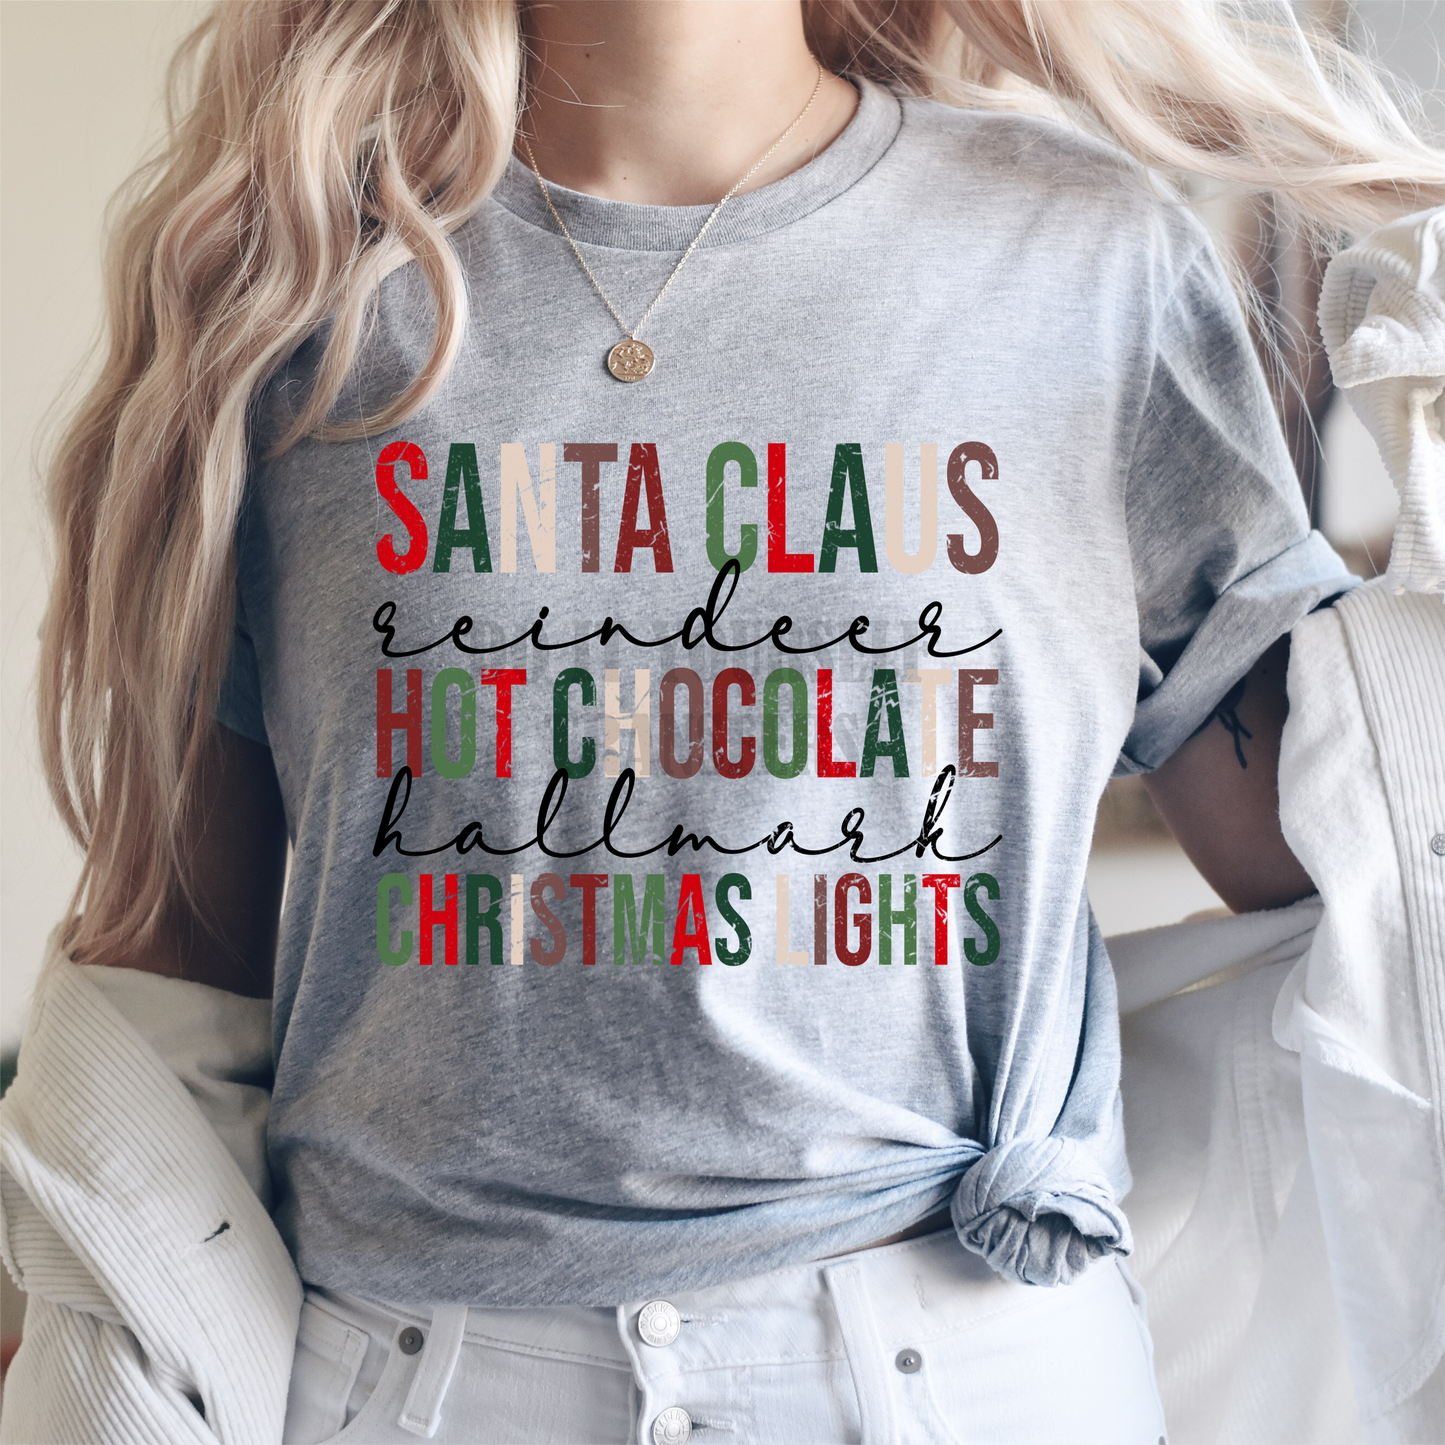 Santa Claus reindeer Hot Chocolate hallmark Christmas lights  size ADULT 12x12 DTF TRANSFERPRINT TO ORDER